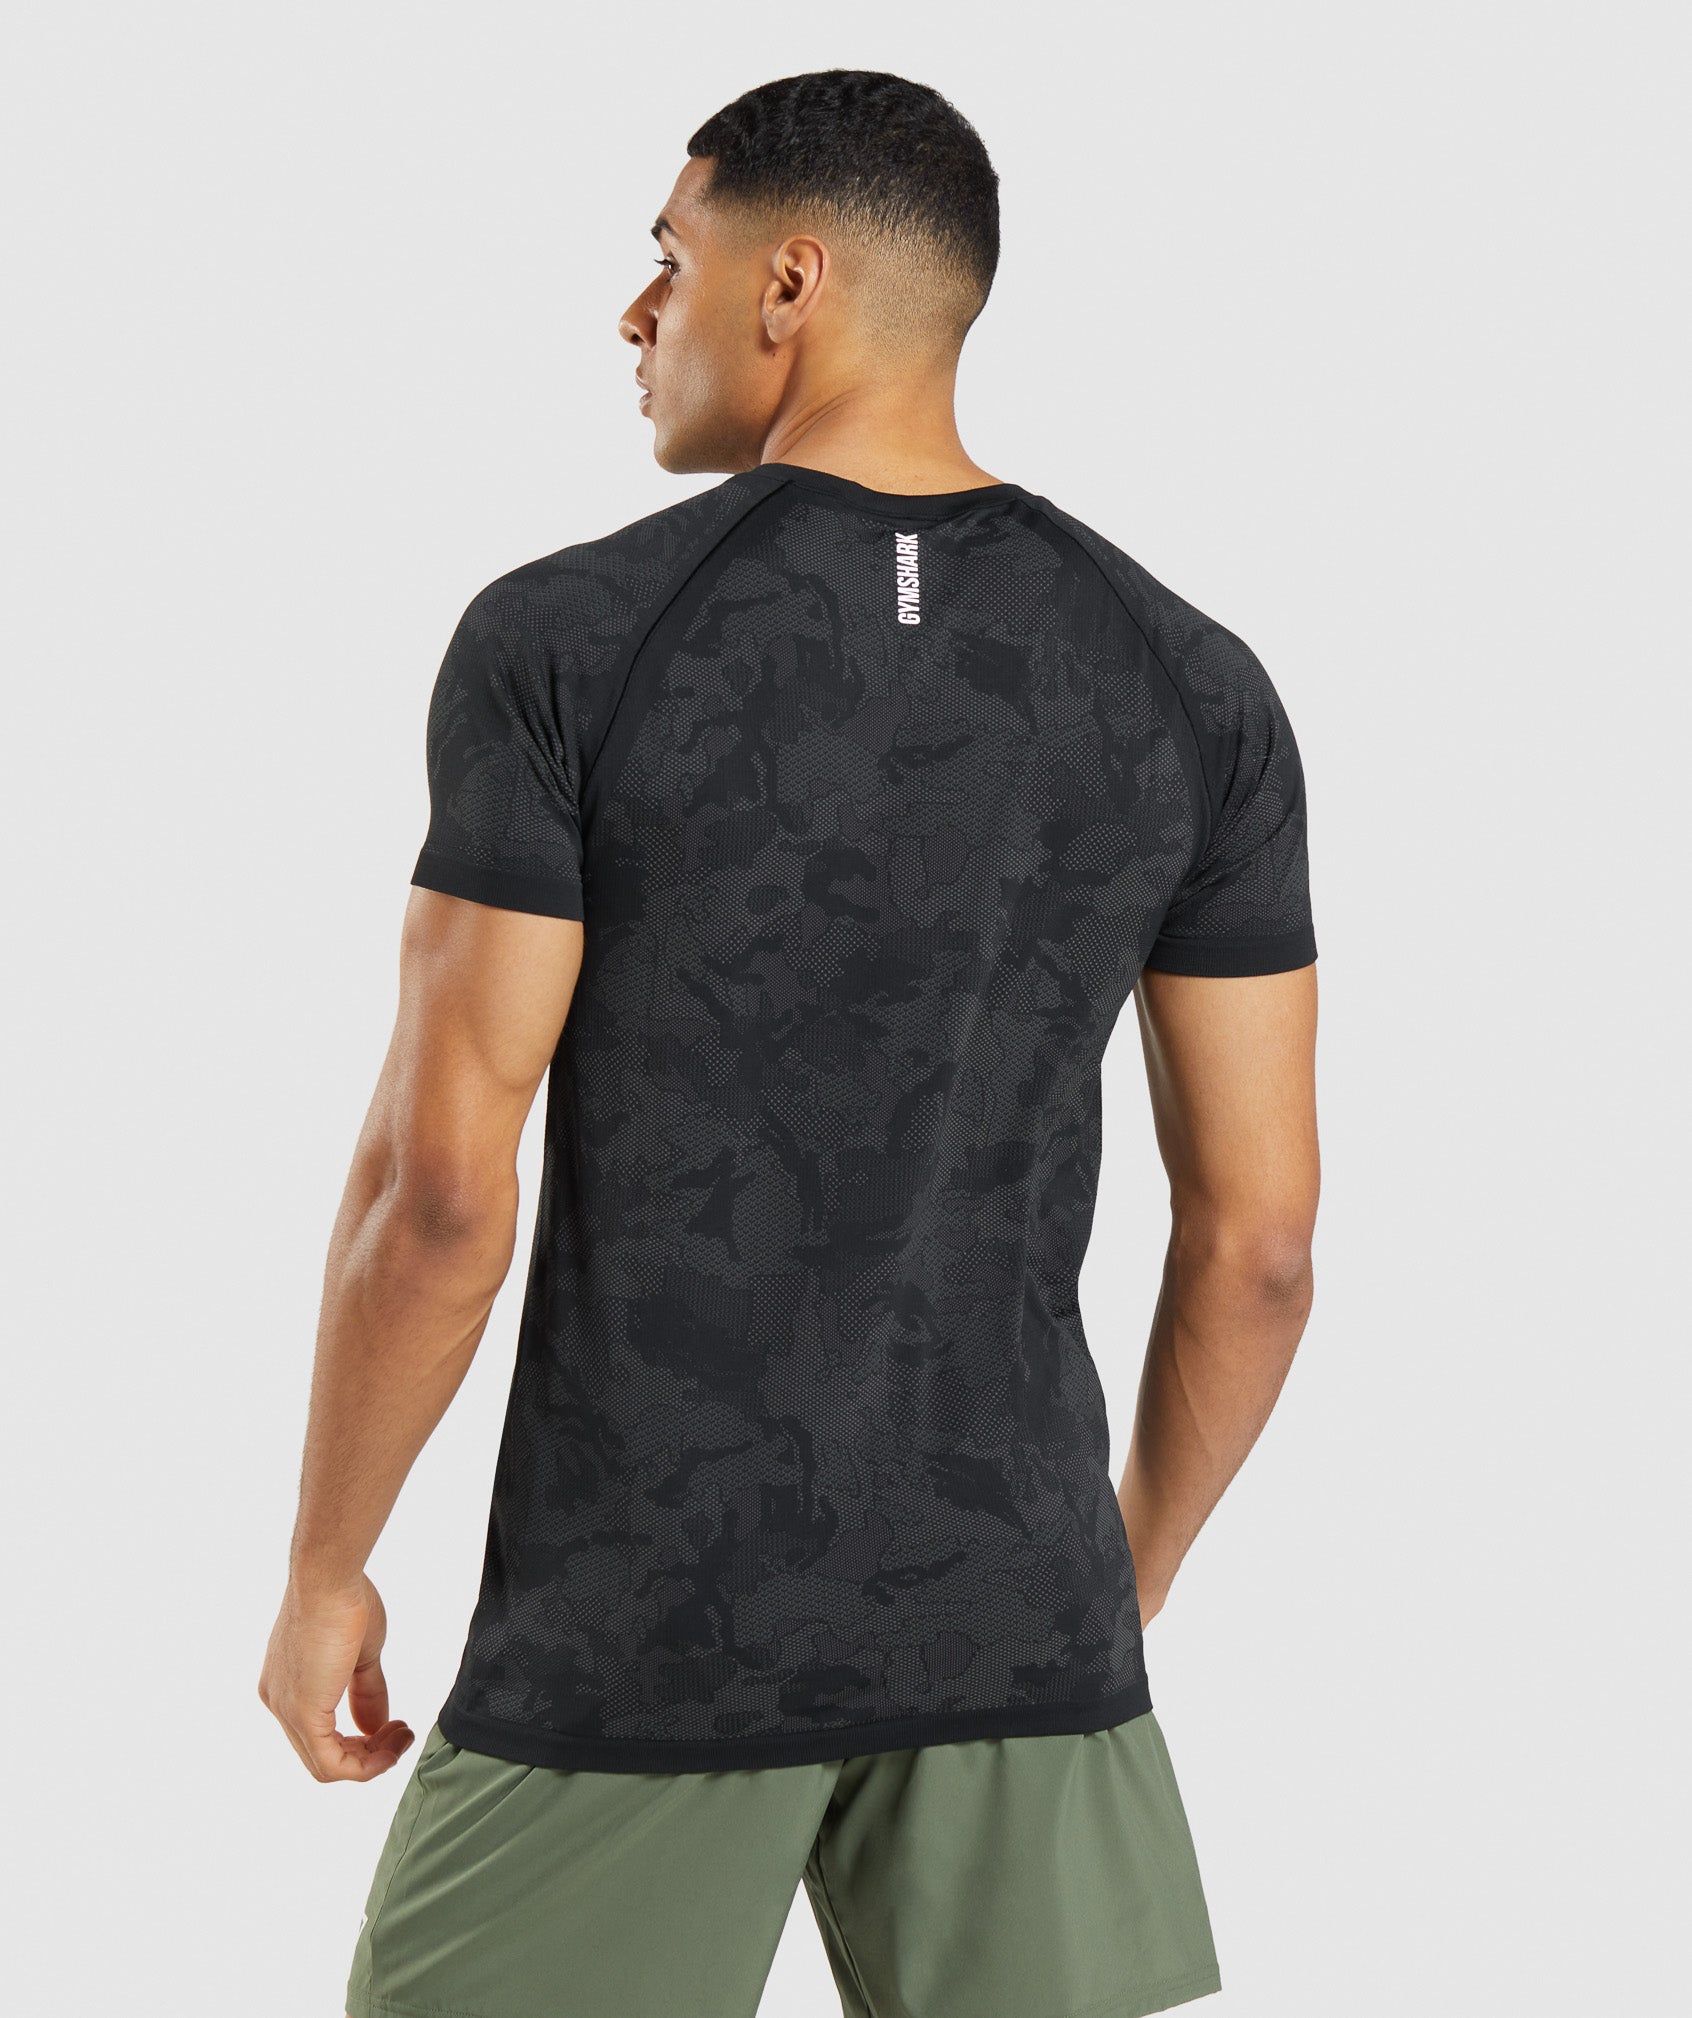 Geo Seamless T-Shirt in Black/Charcoal Grey